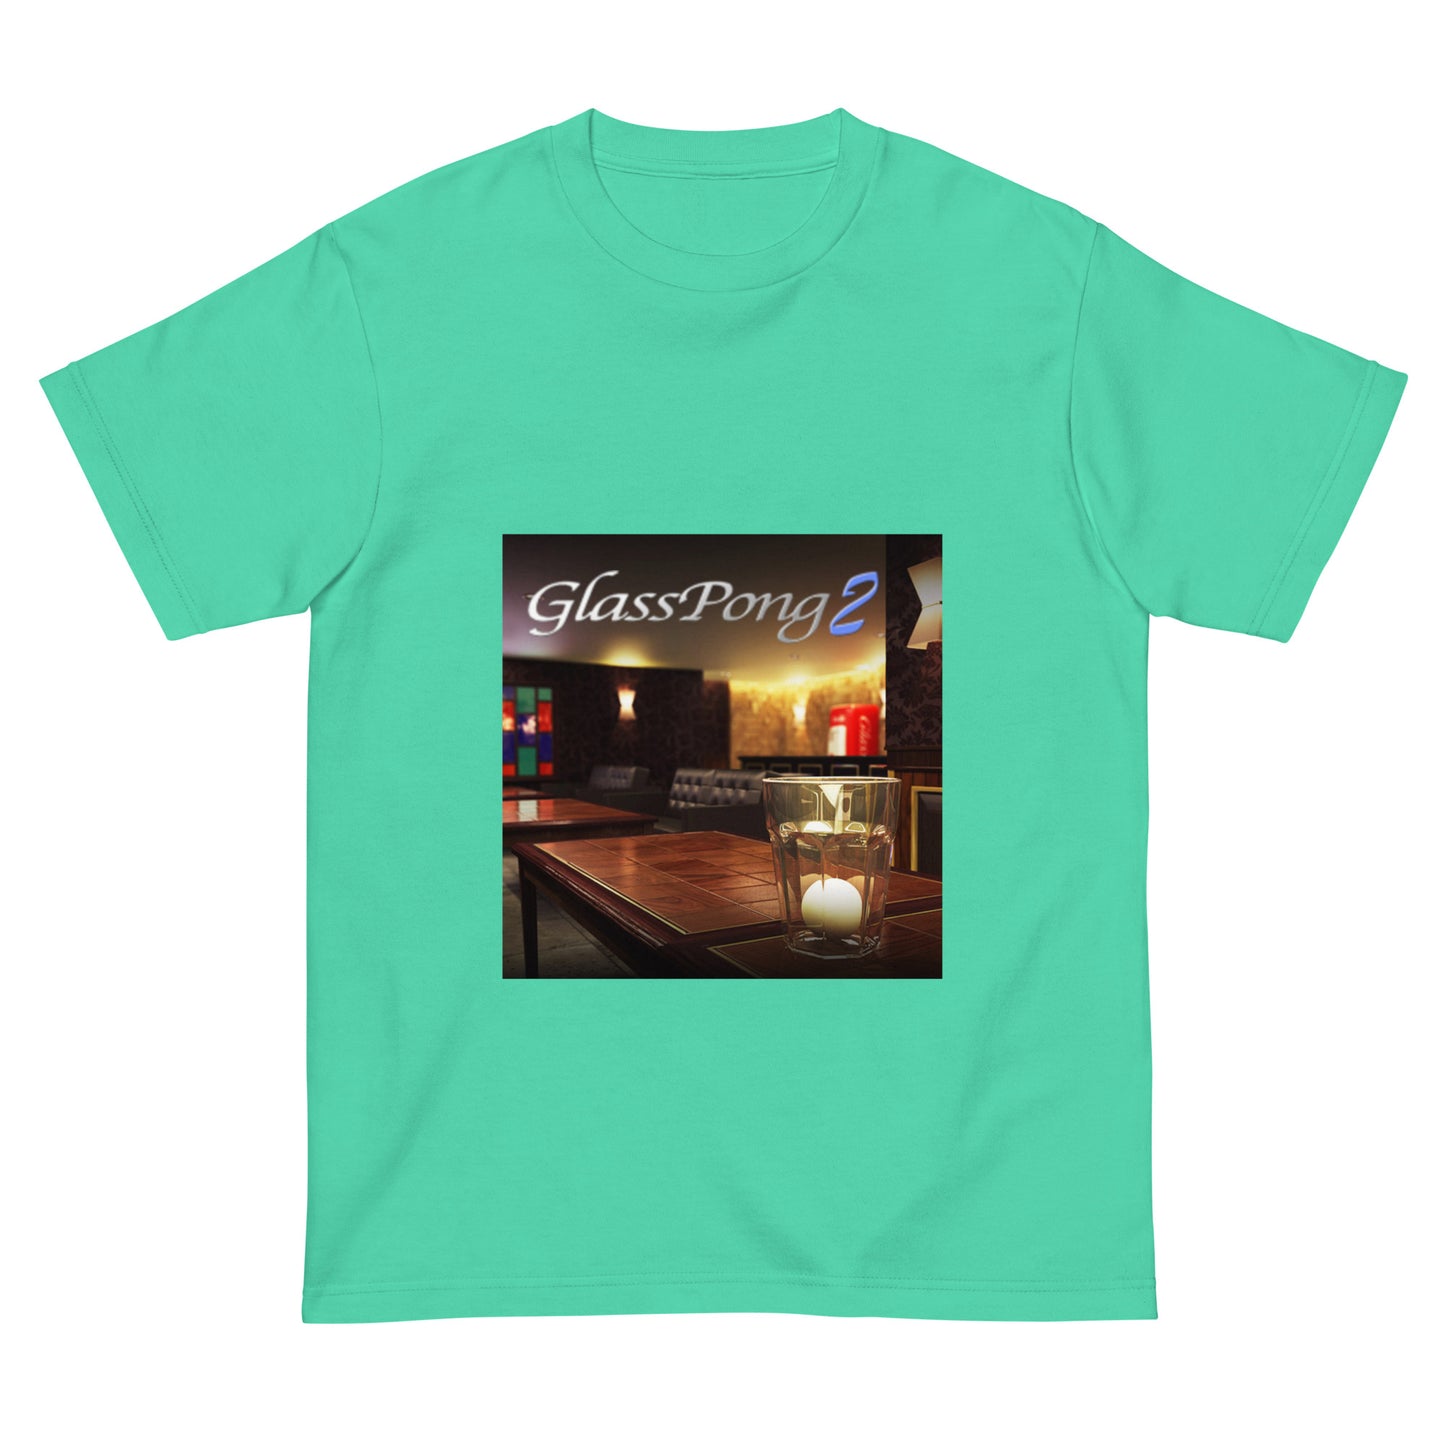 GlassPong2 top page T-shirt